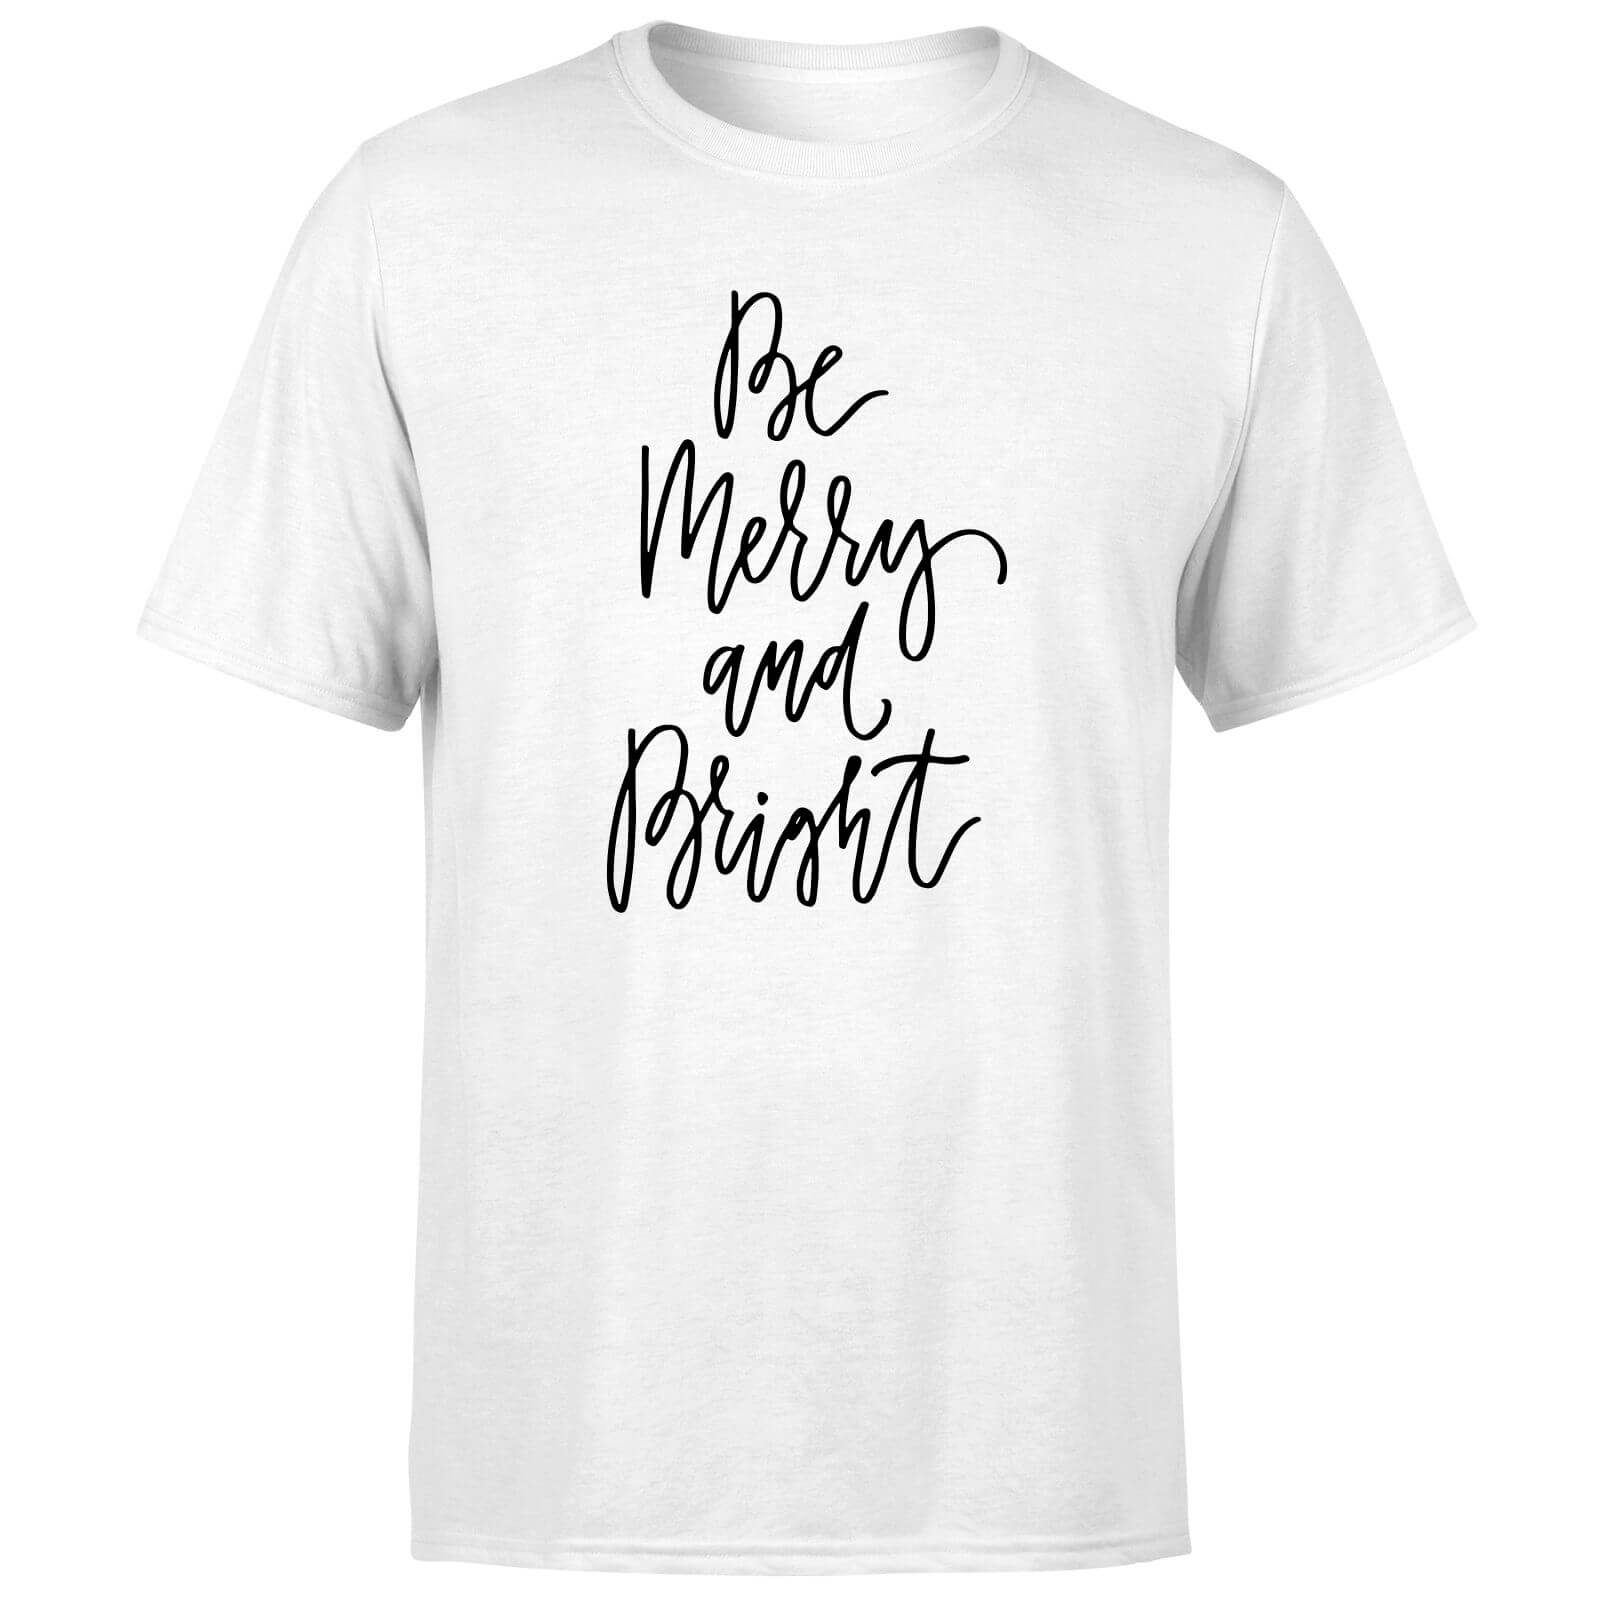 Be Merry and Bright T-Shirt - White - S - White